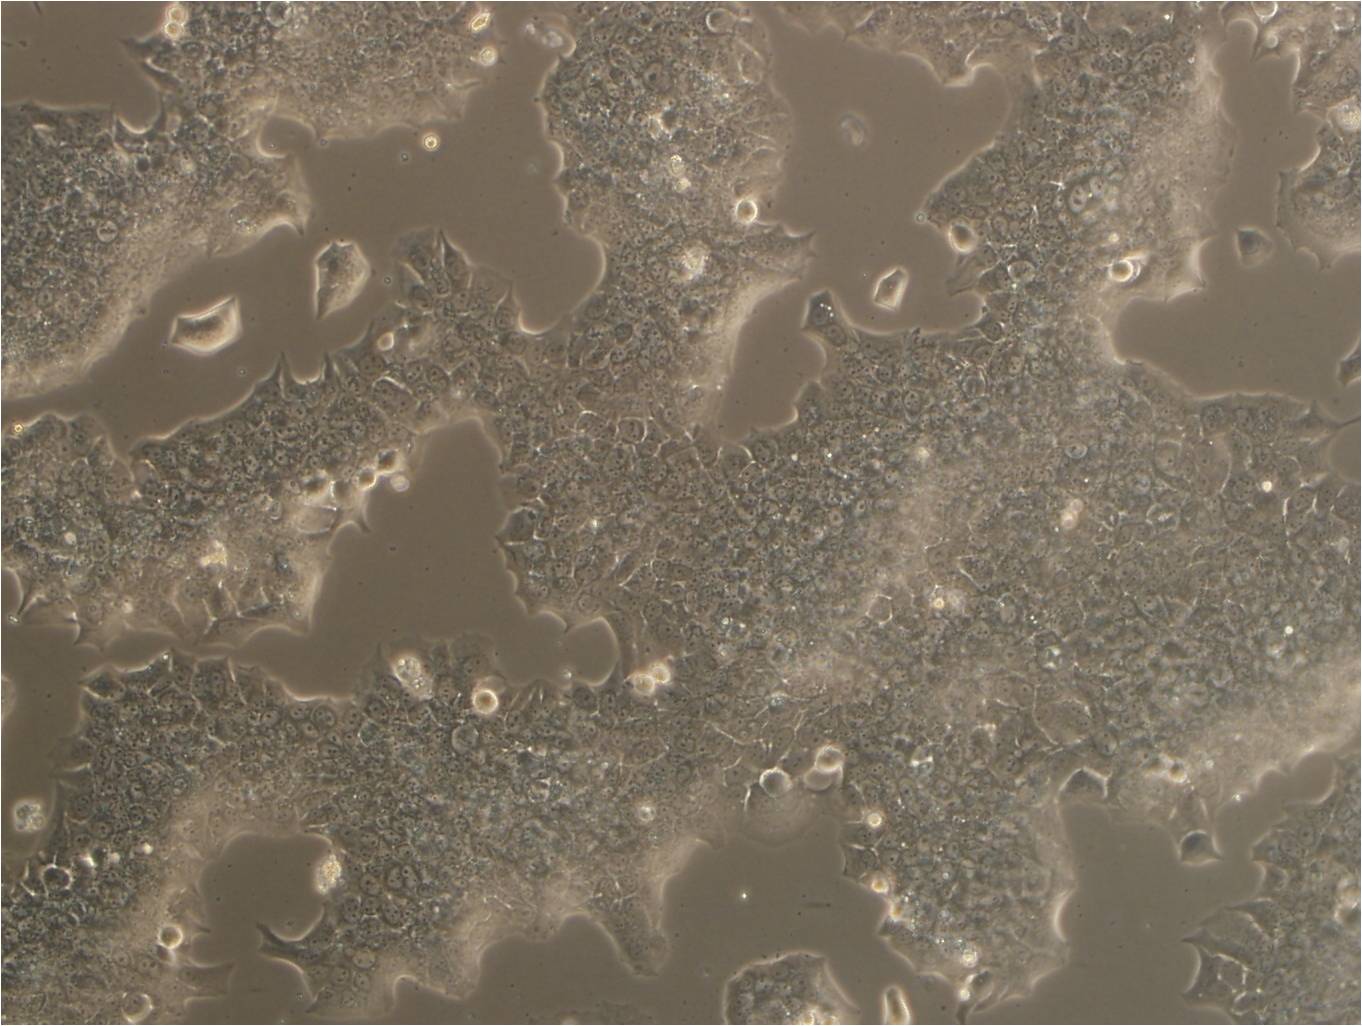 SW900 epithelioid cells人肺癌细胞系,SW900 epithelioid cells